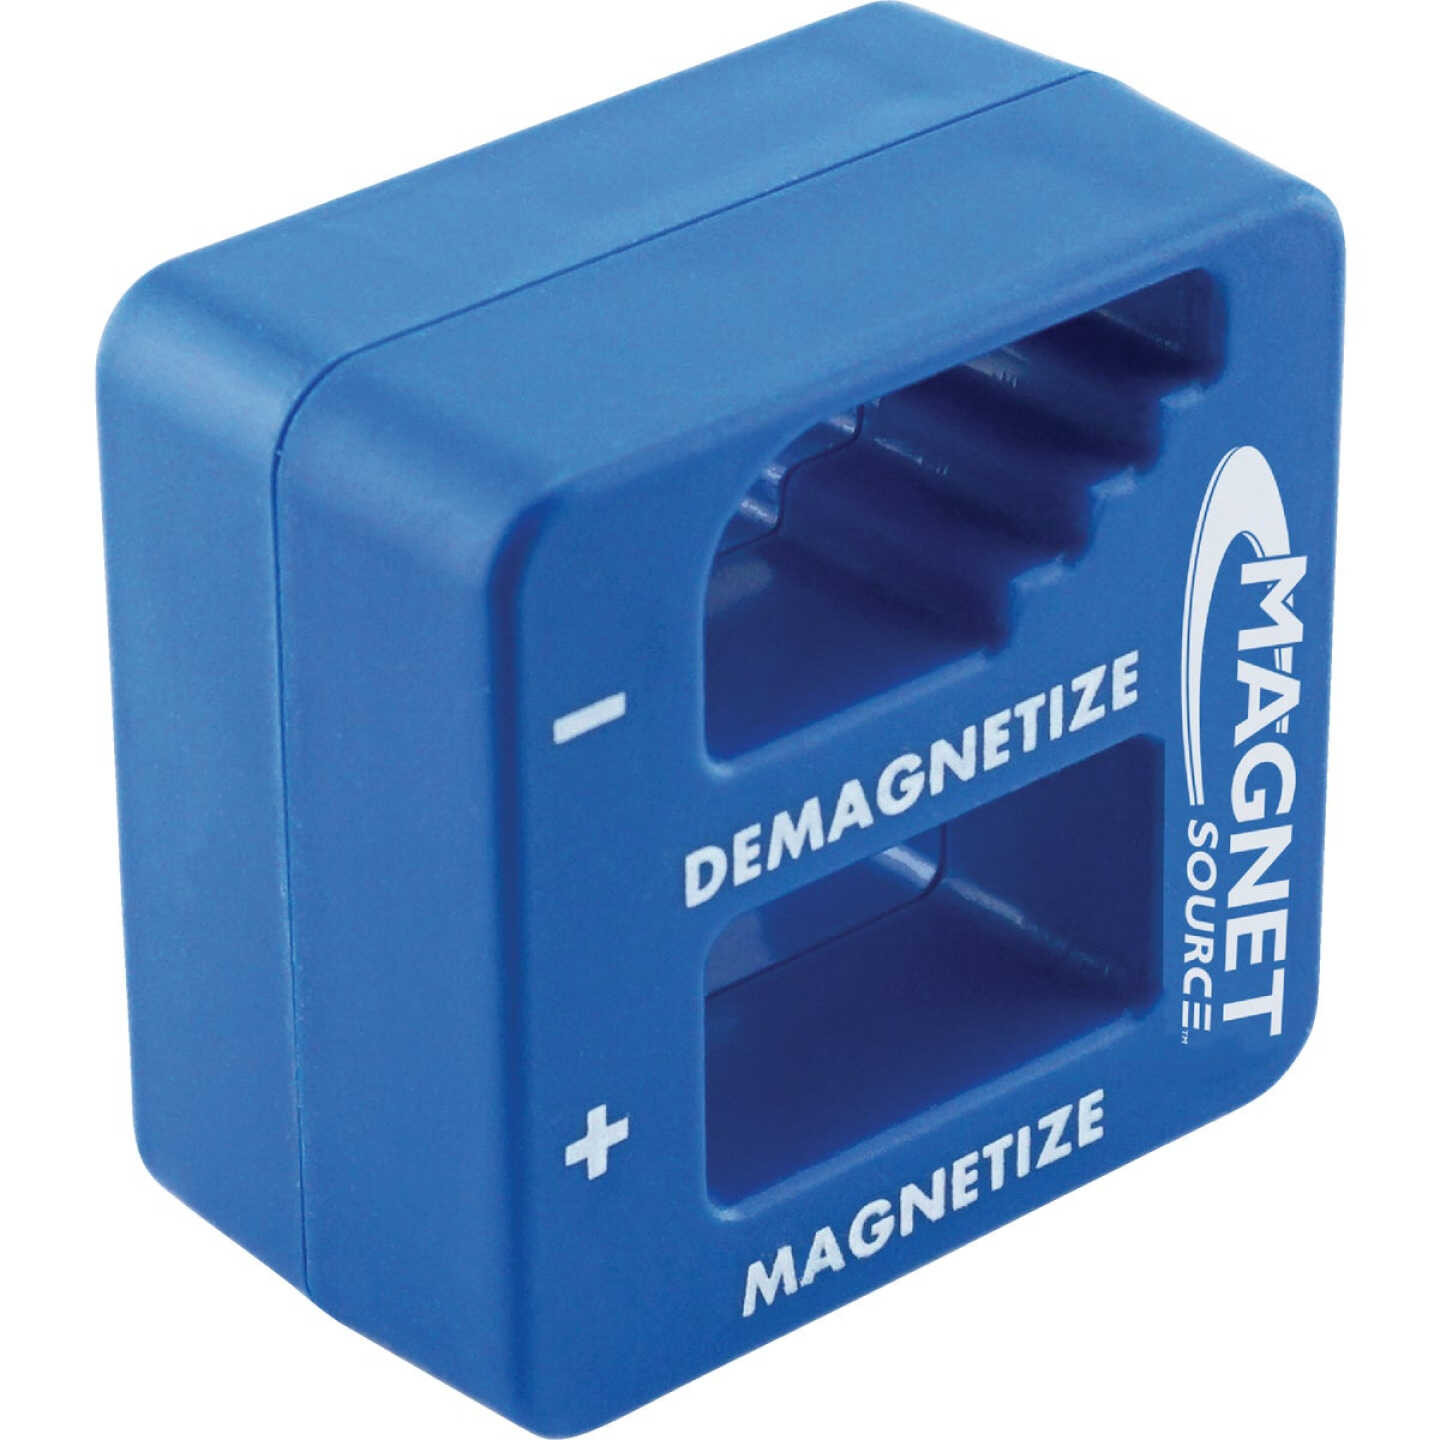 Master Magnetics Magnetizer and Degmagnetizer Image 1